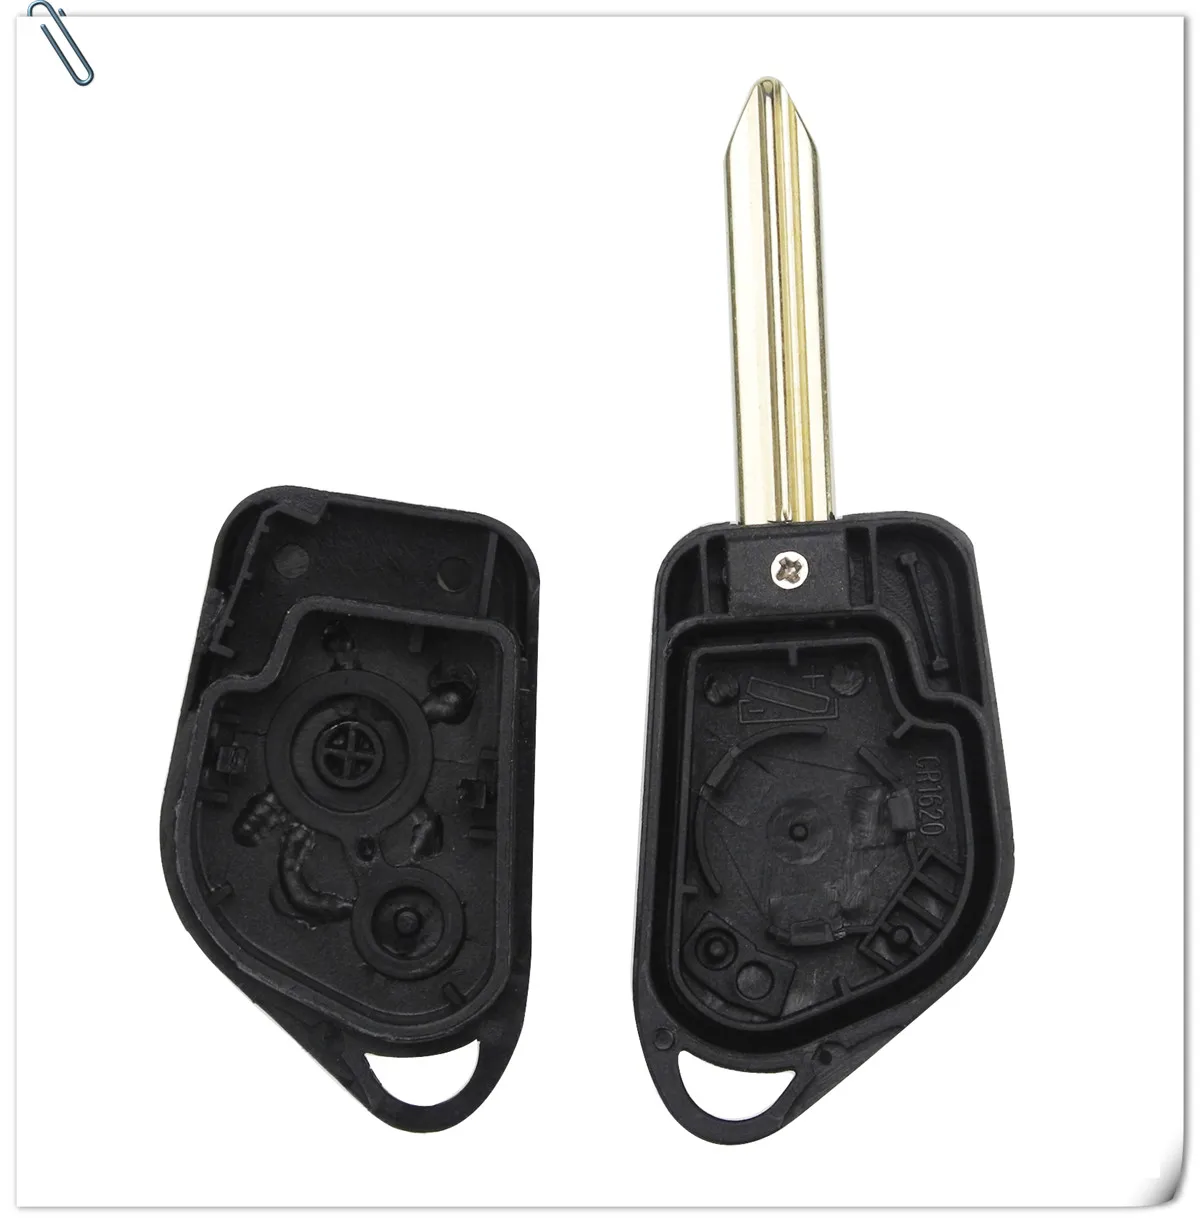 jingyuqin Remote Entry Key Fob Shell Case For Citroen Elysee Saxo Xsara  Picasso Berlingo C2 C3 for Peugeot 106 206 306 205 405